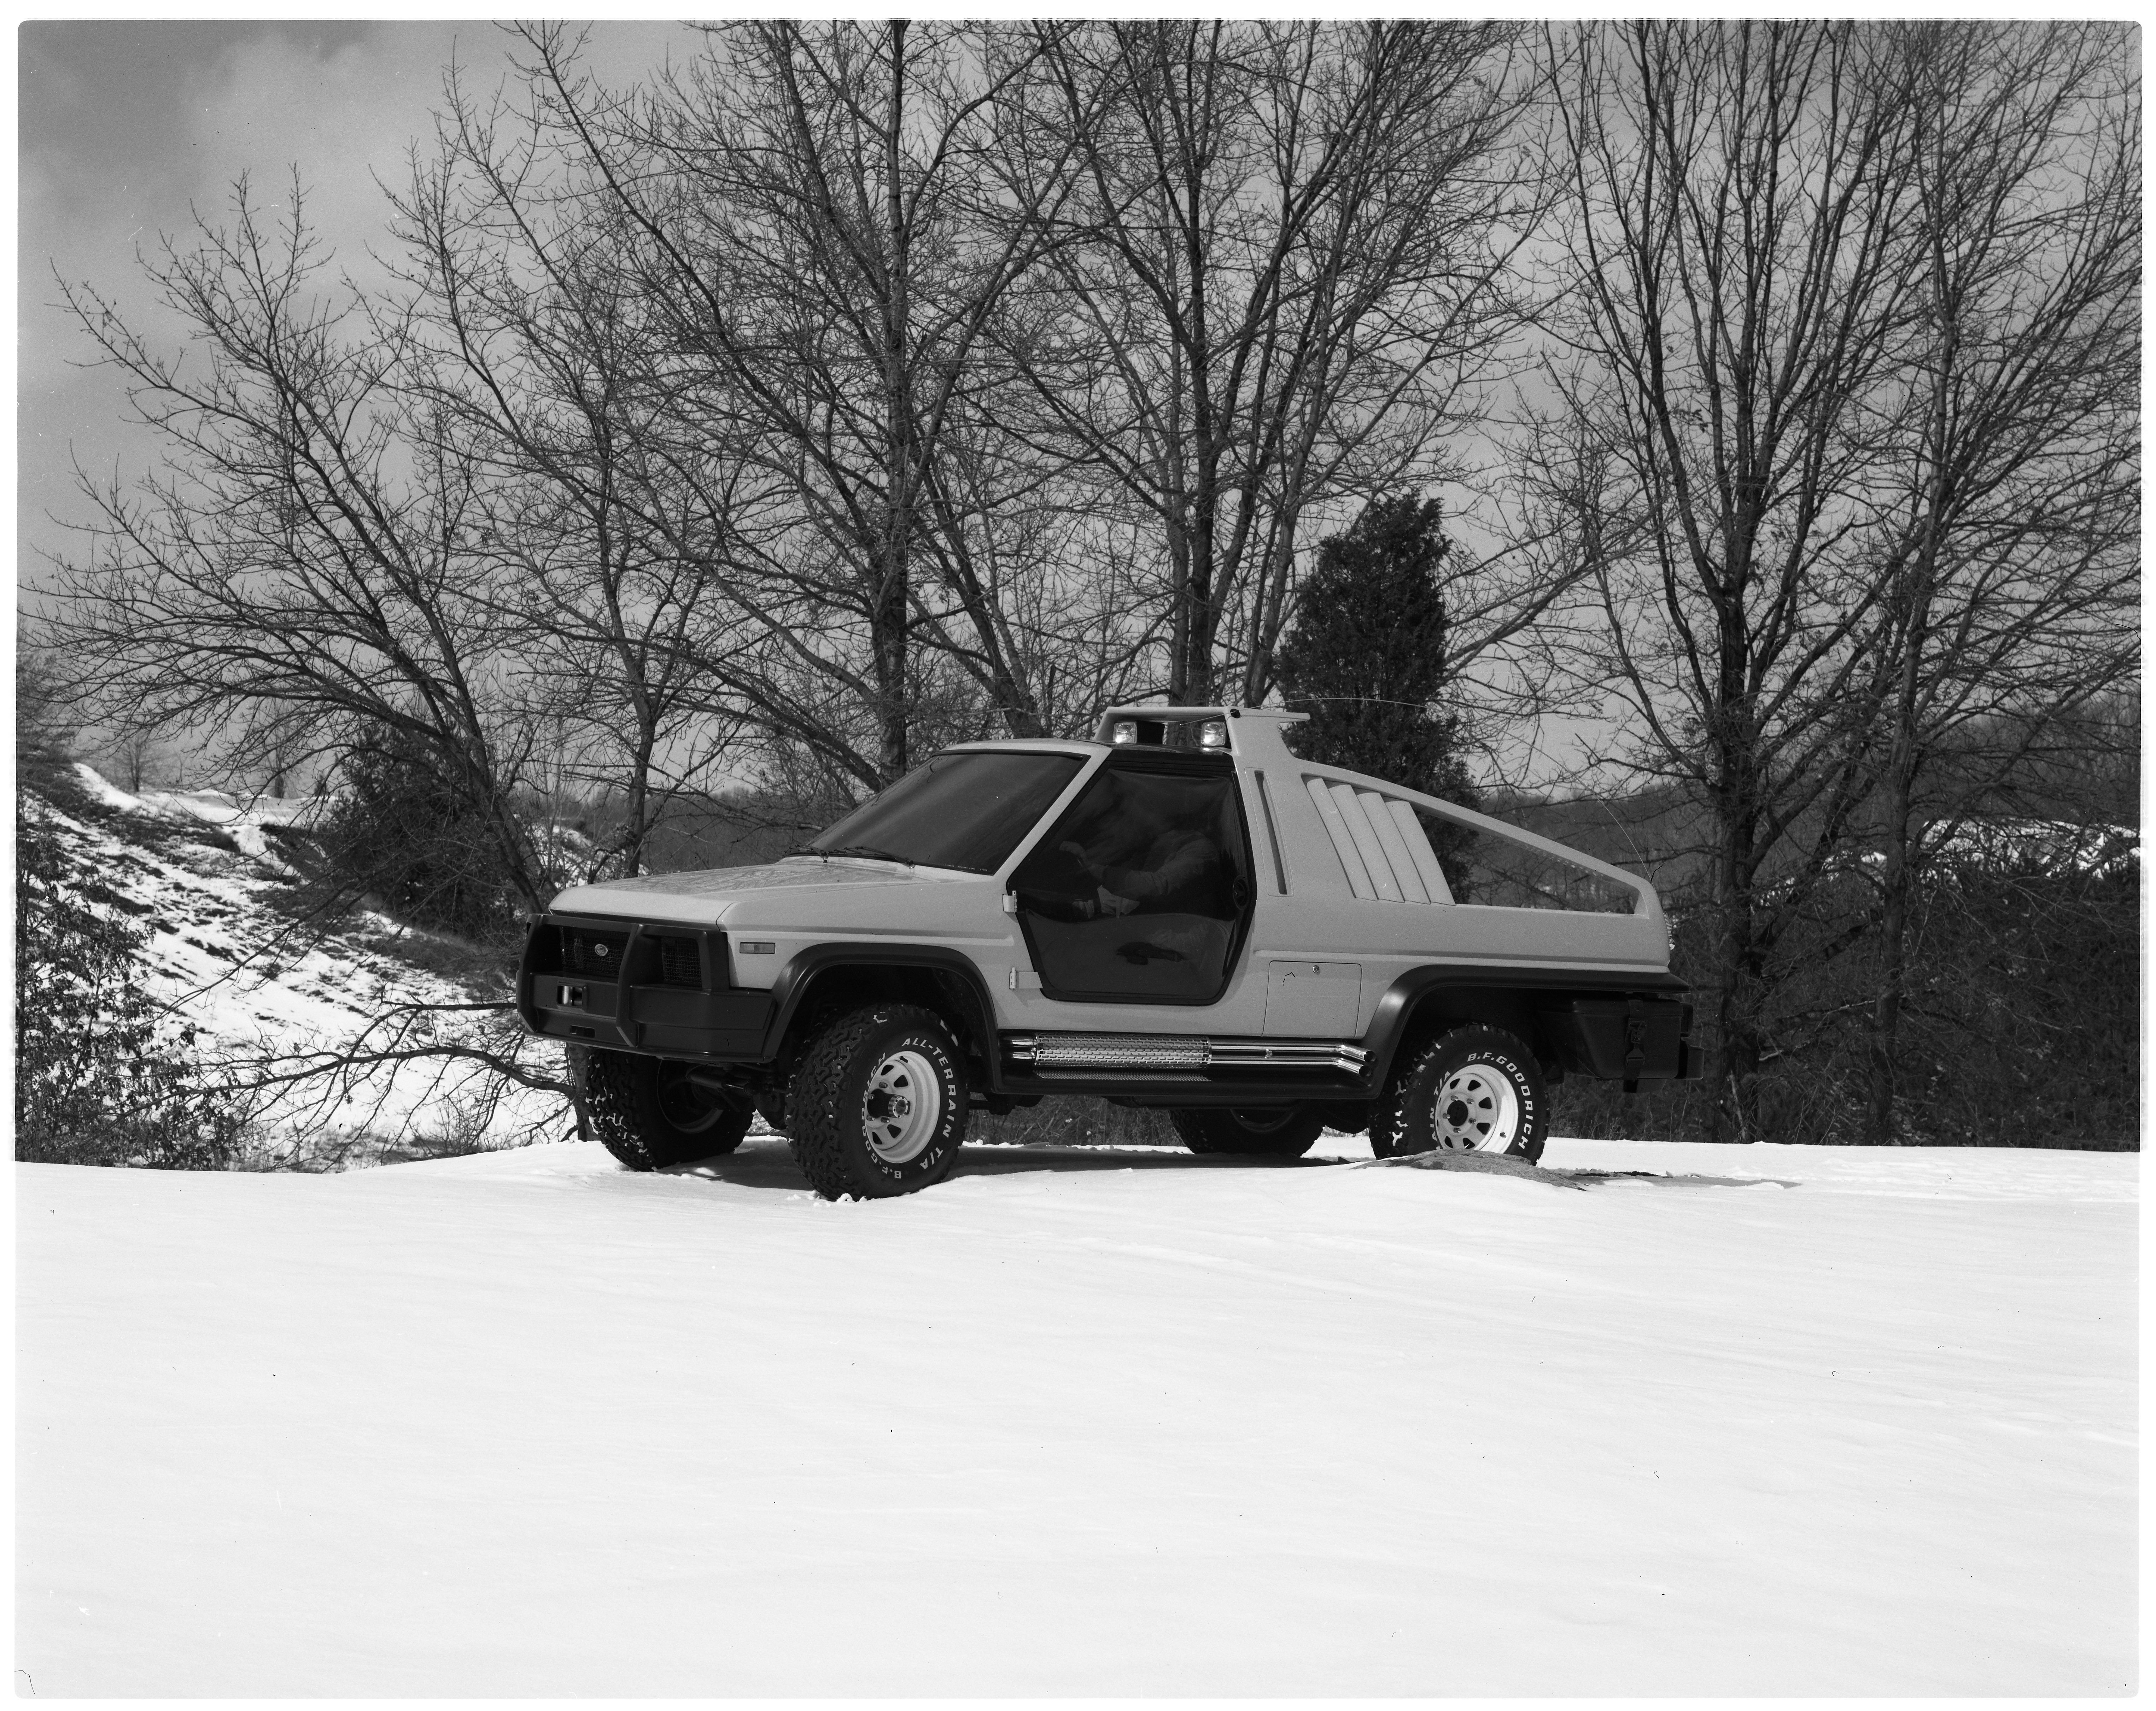 1981 Ford Bronco Montana Lobo Concept